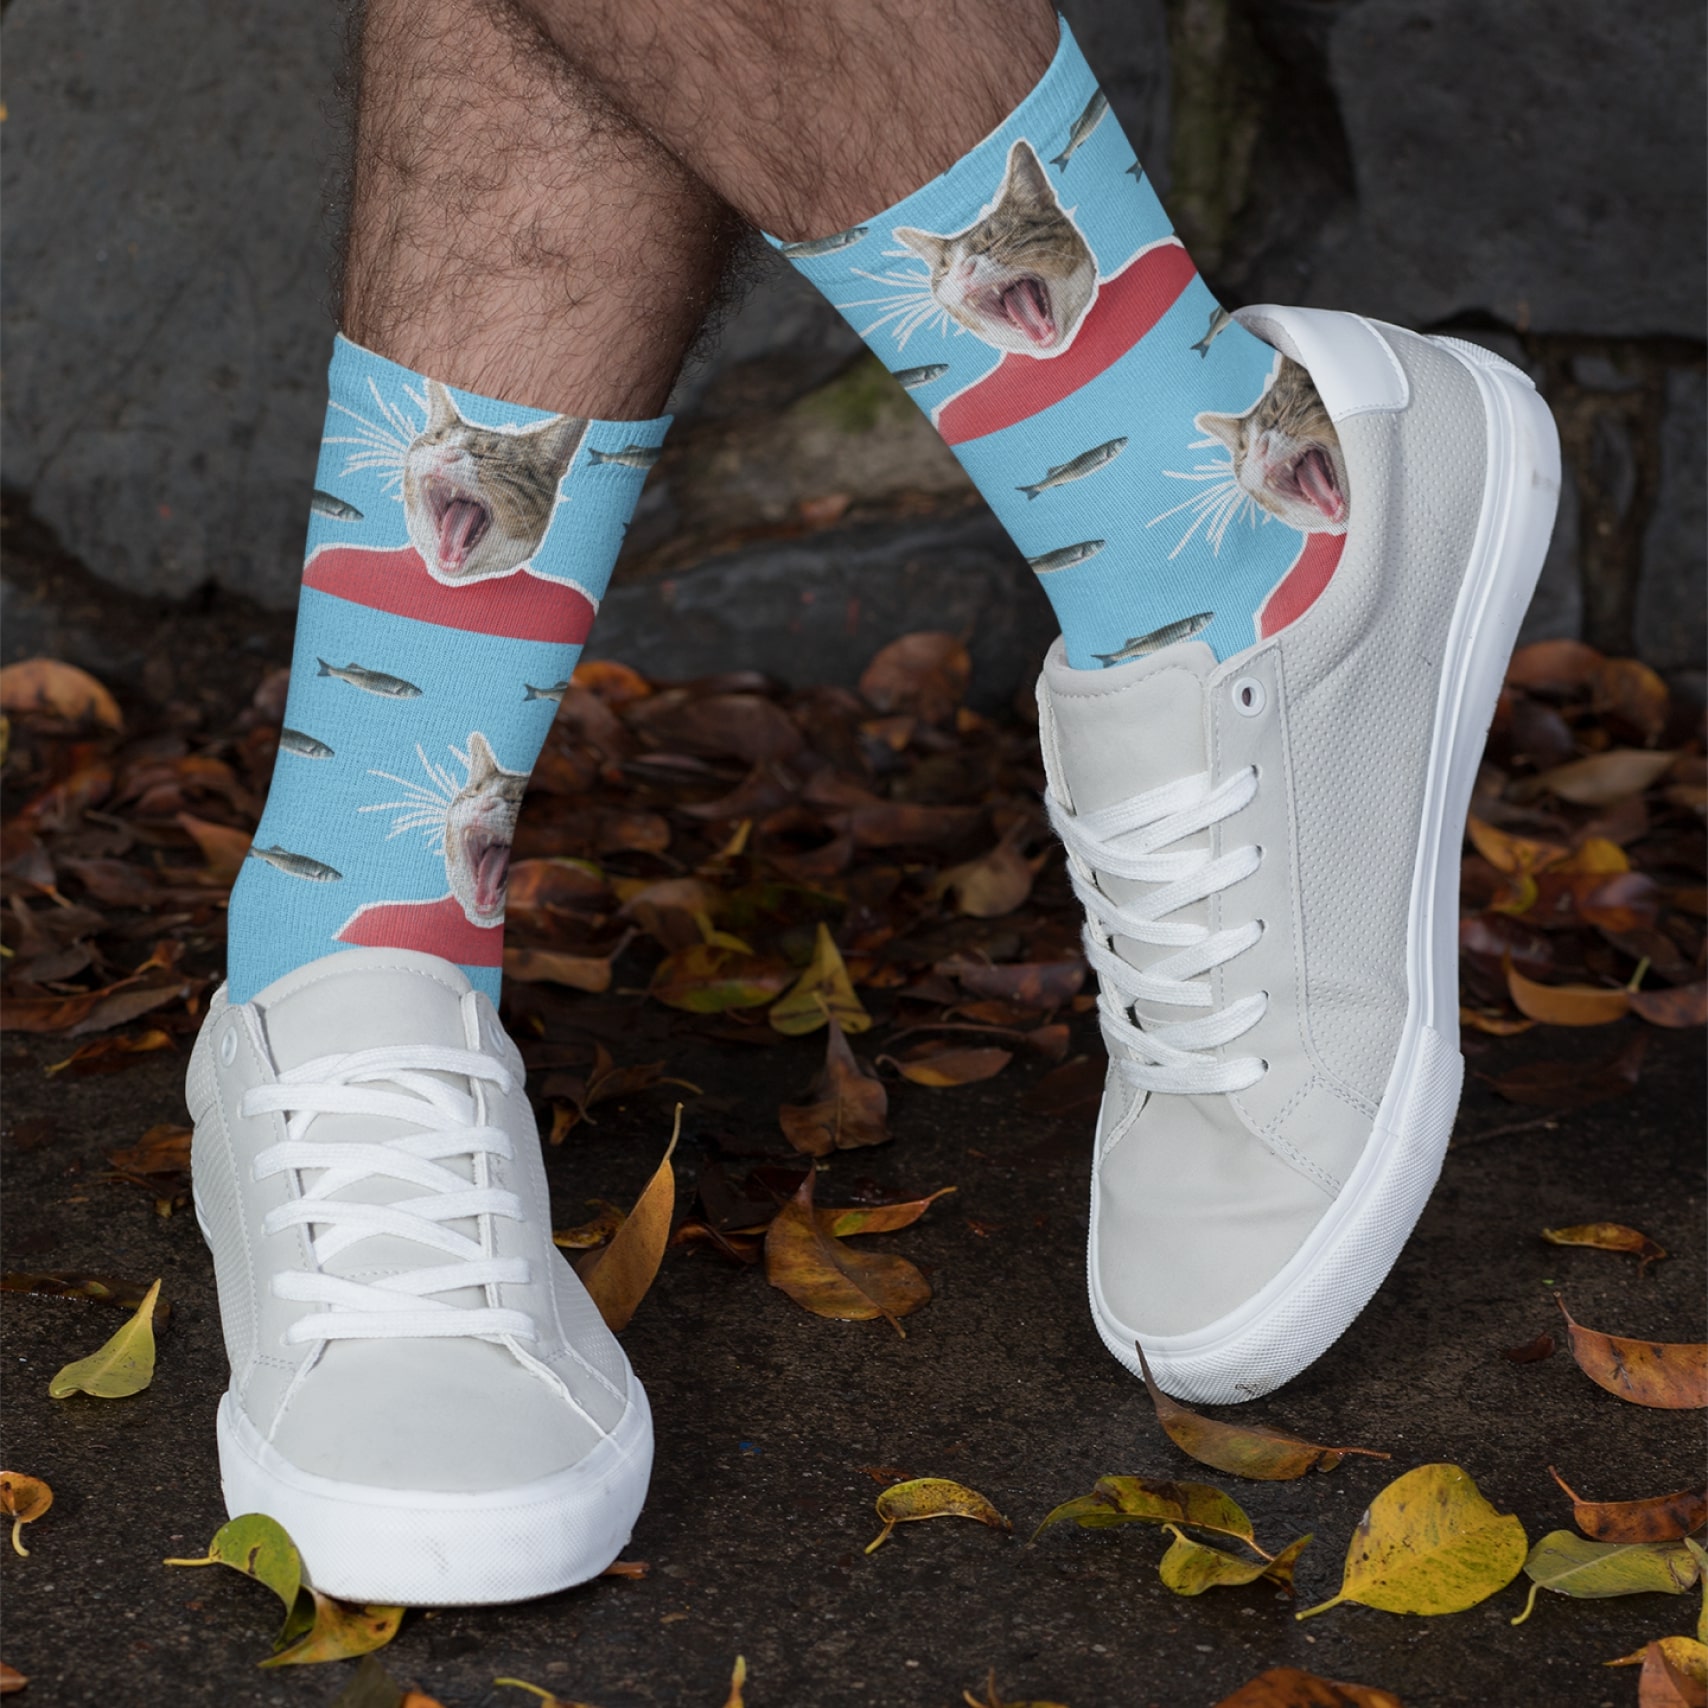 Custom socks in blue with a cat print.